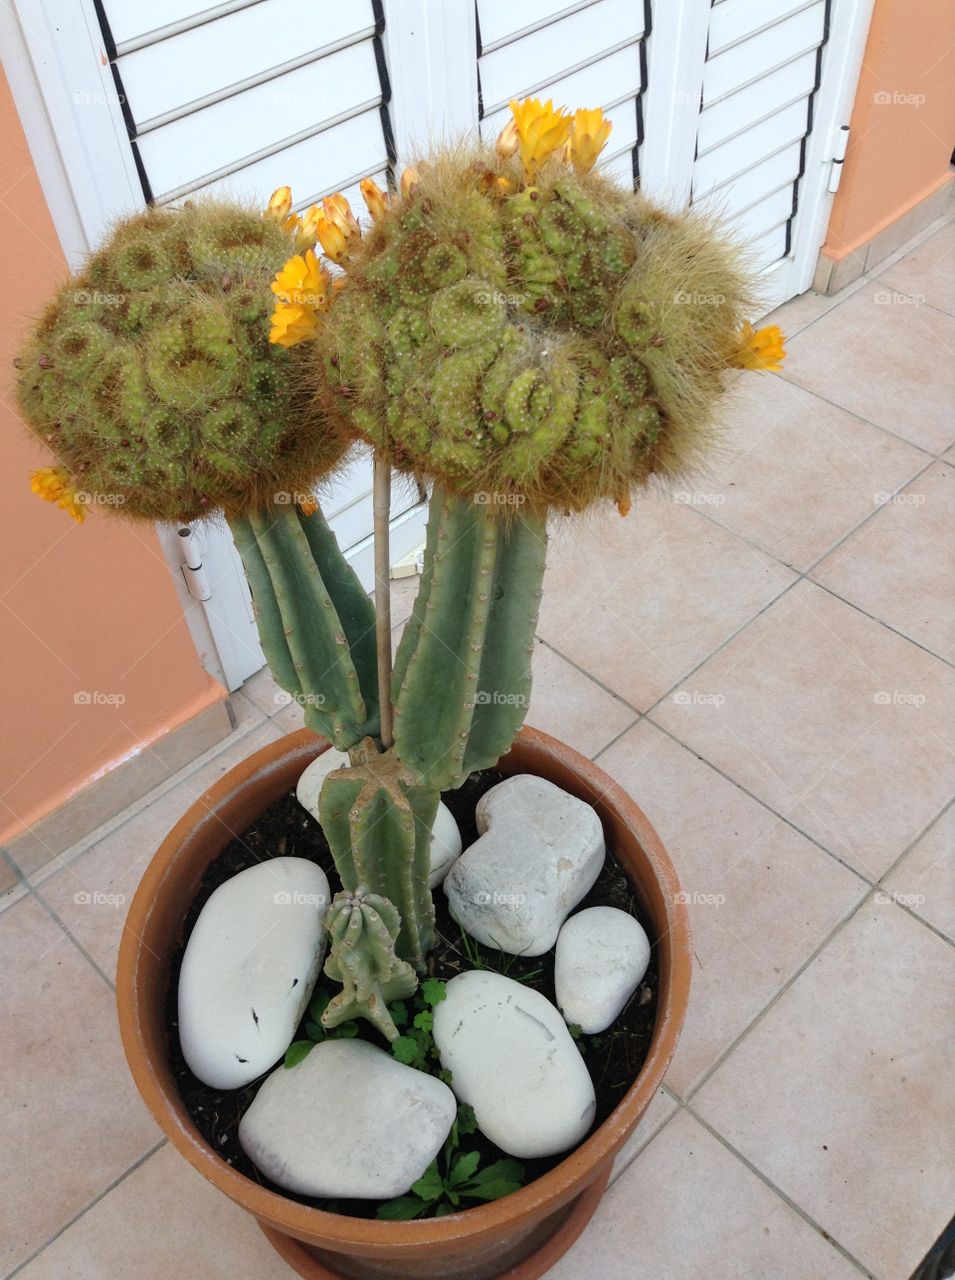 Cactus flowering in a pot.